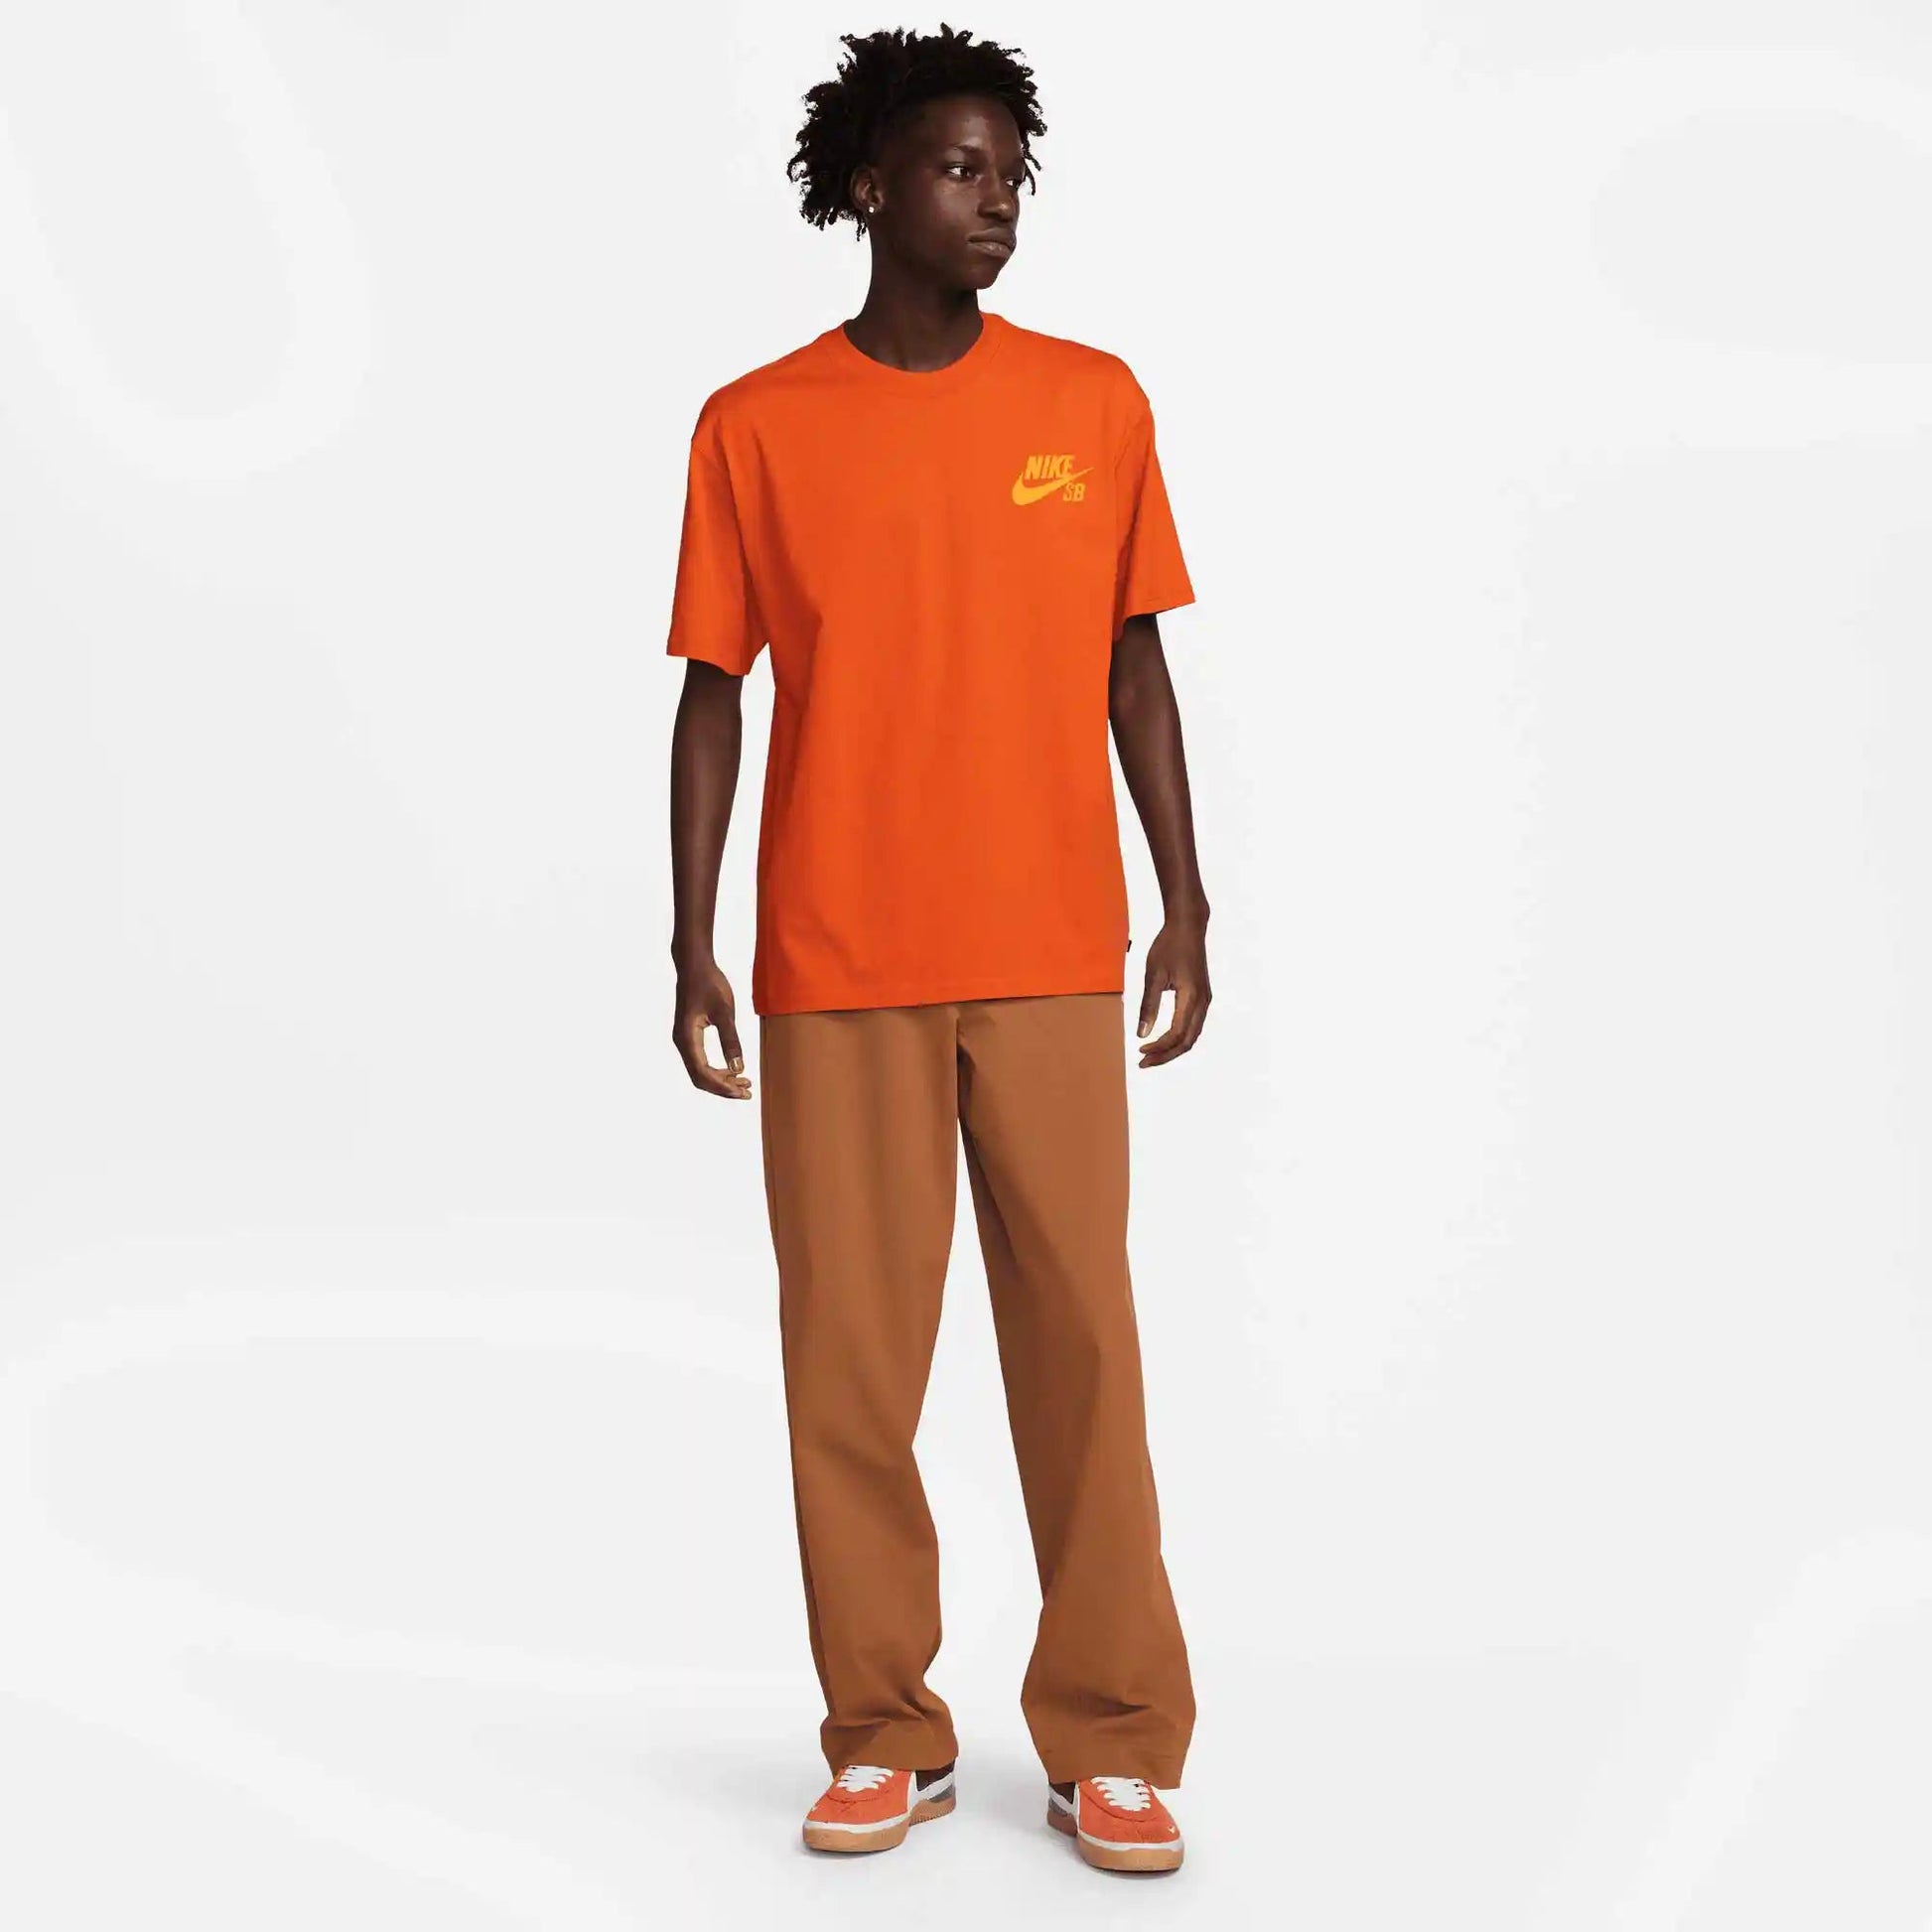 Nike SB Logo Skate T-Shirt, campfire orange - Tiki Room Skateboards - 3